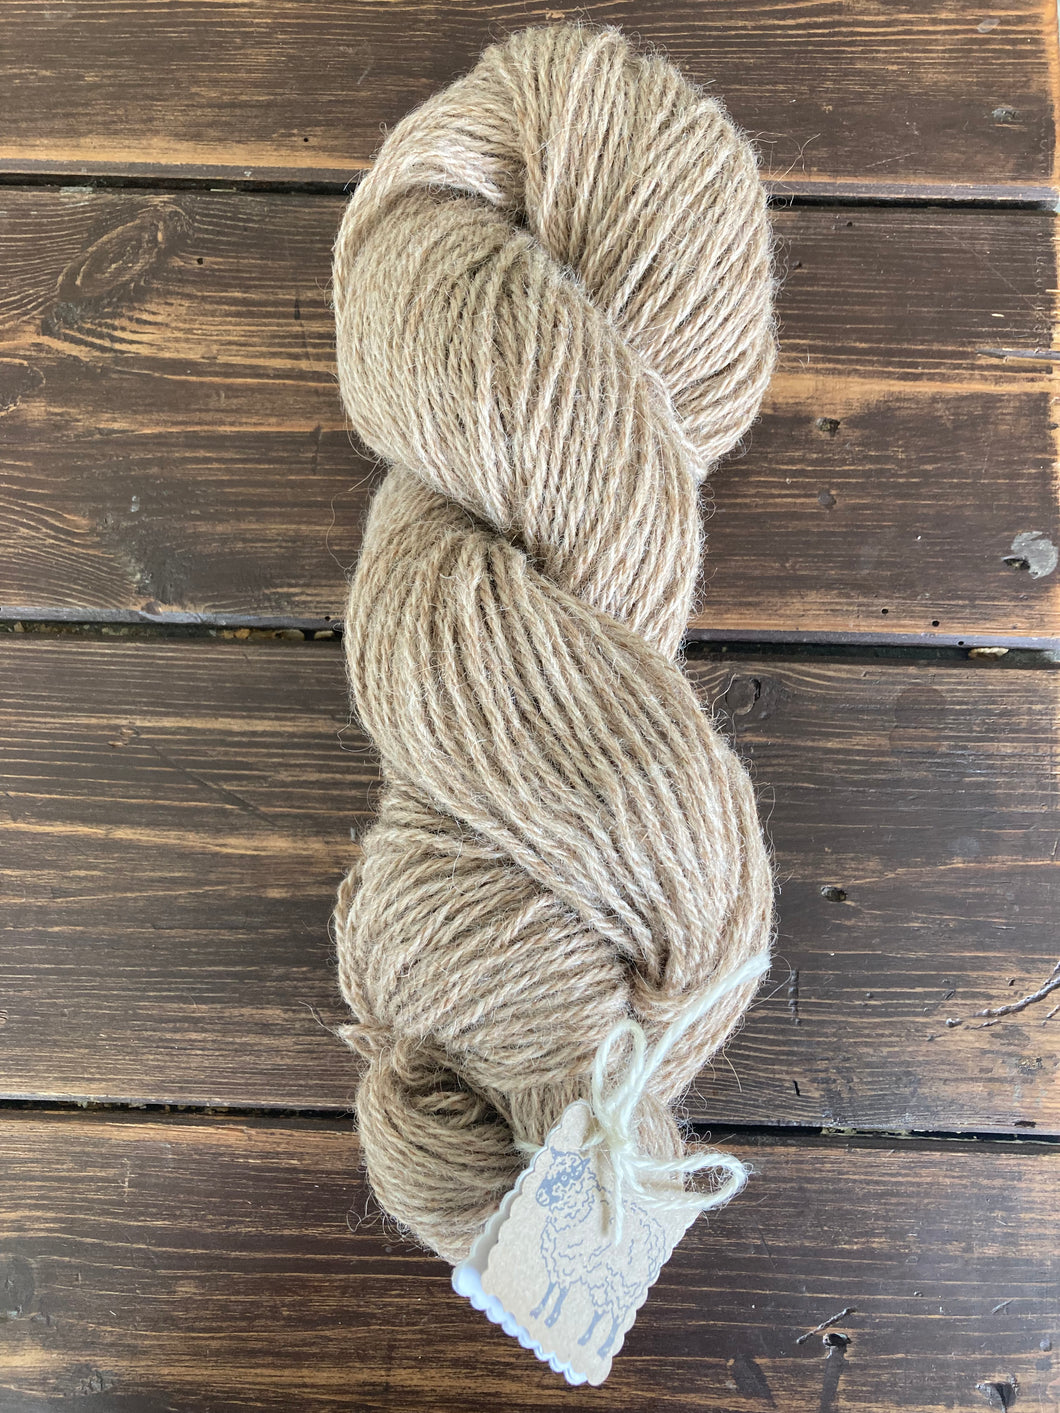 Lincoln Longwool Shearling and Alpaca Aran Weight Knitting Yarn  -  100g hank